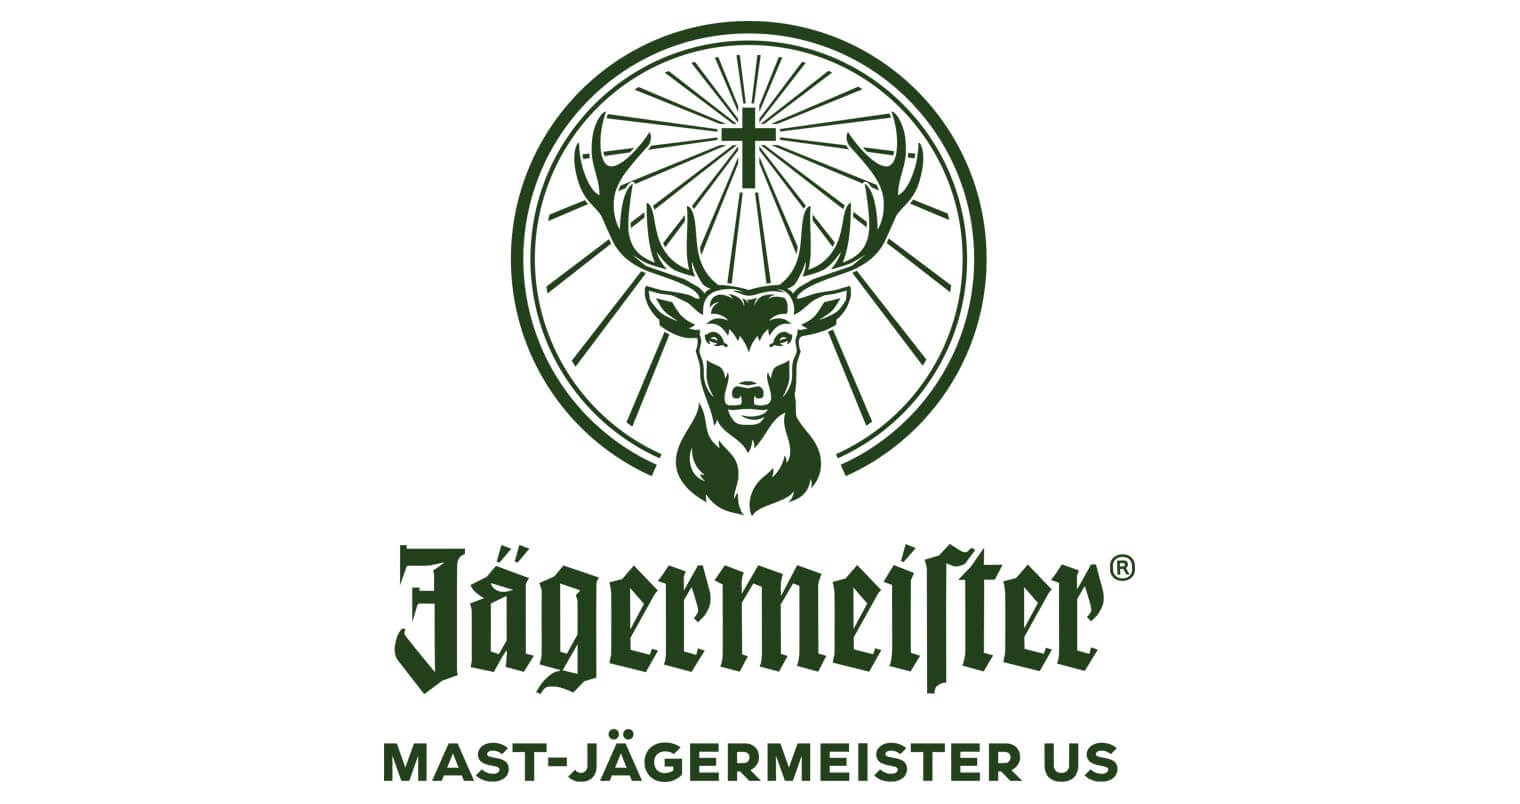 Sidney Frank Announces Name Change to Mast-Jägermeister U.S., featured image